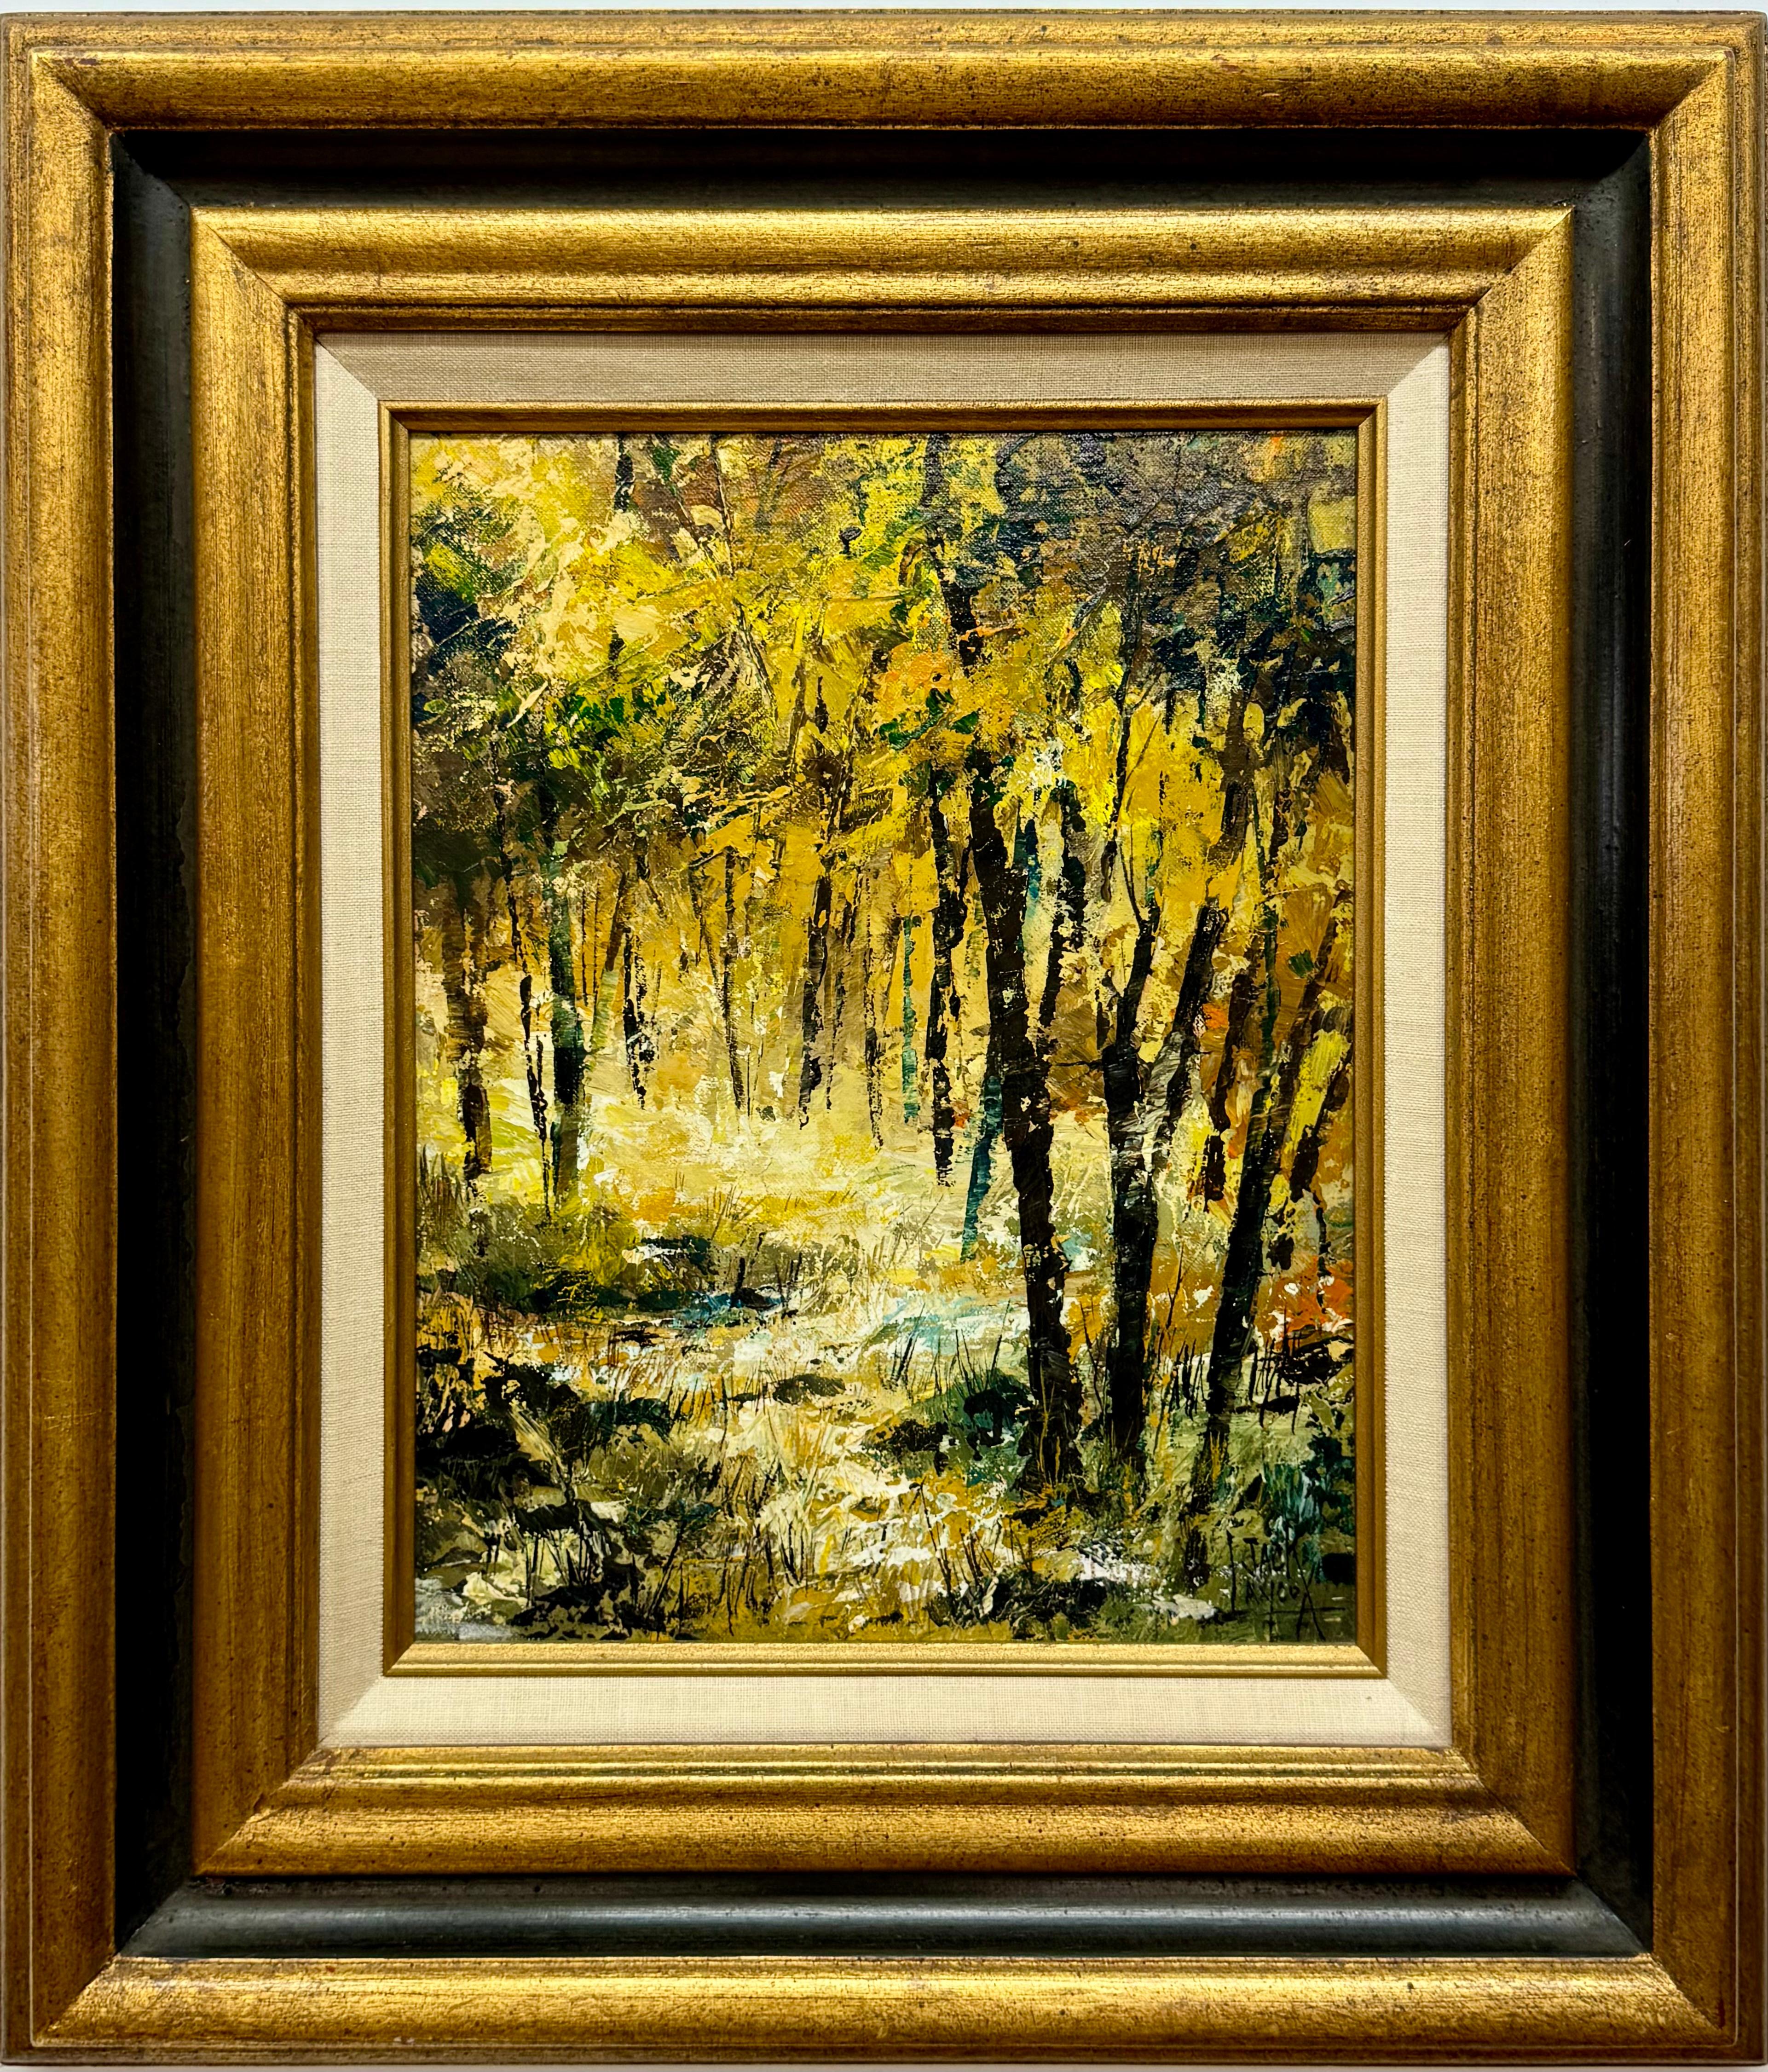 Jack Laycox, "Indian Summer"

Oil on panel

14 x 11 unframed, 19.5 x 22.5 framed